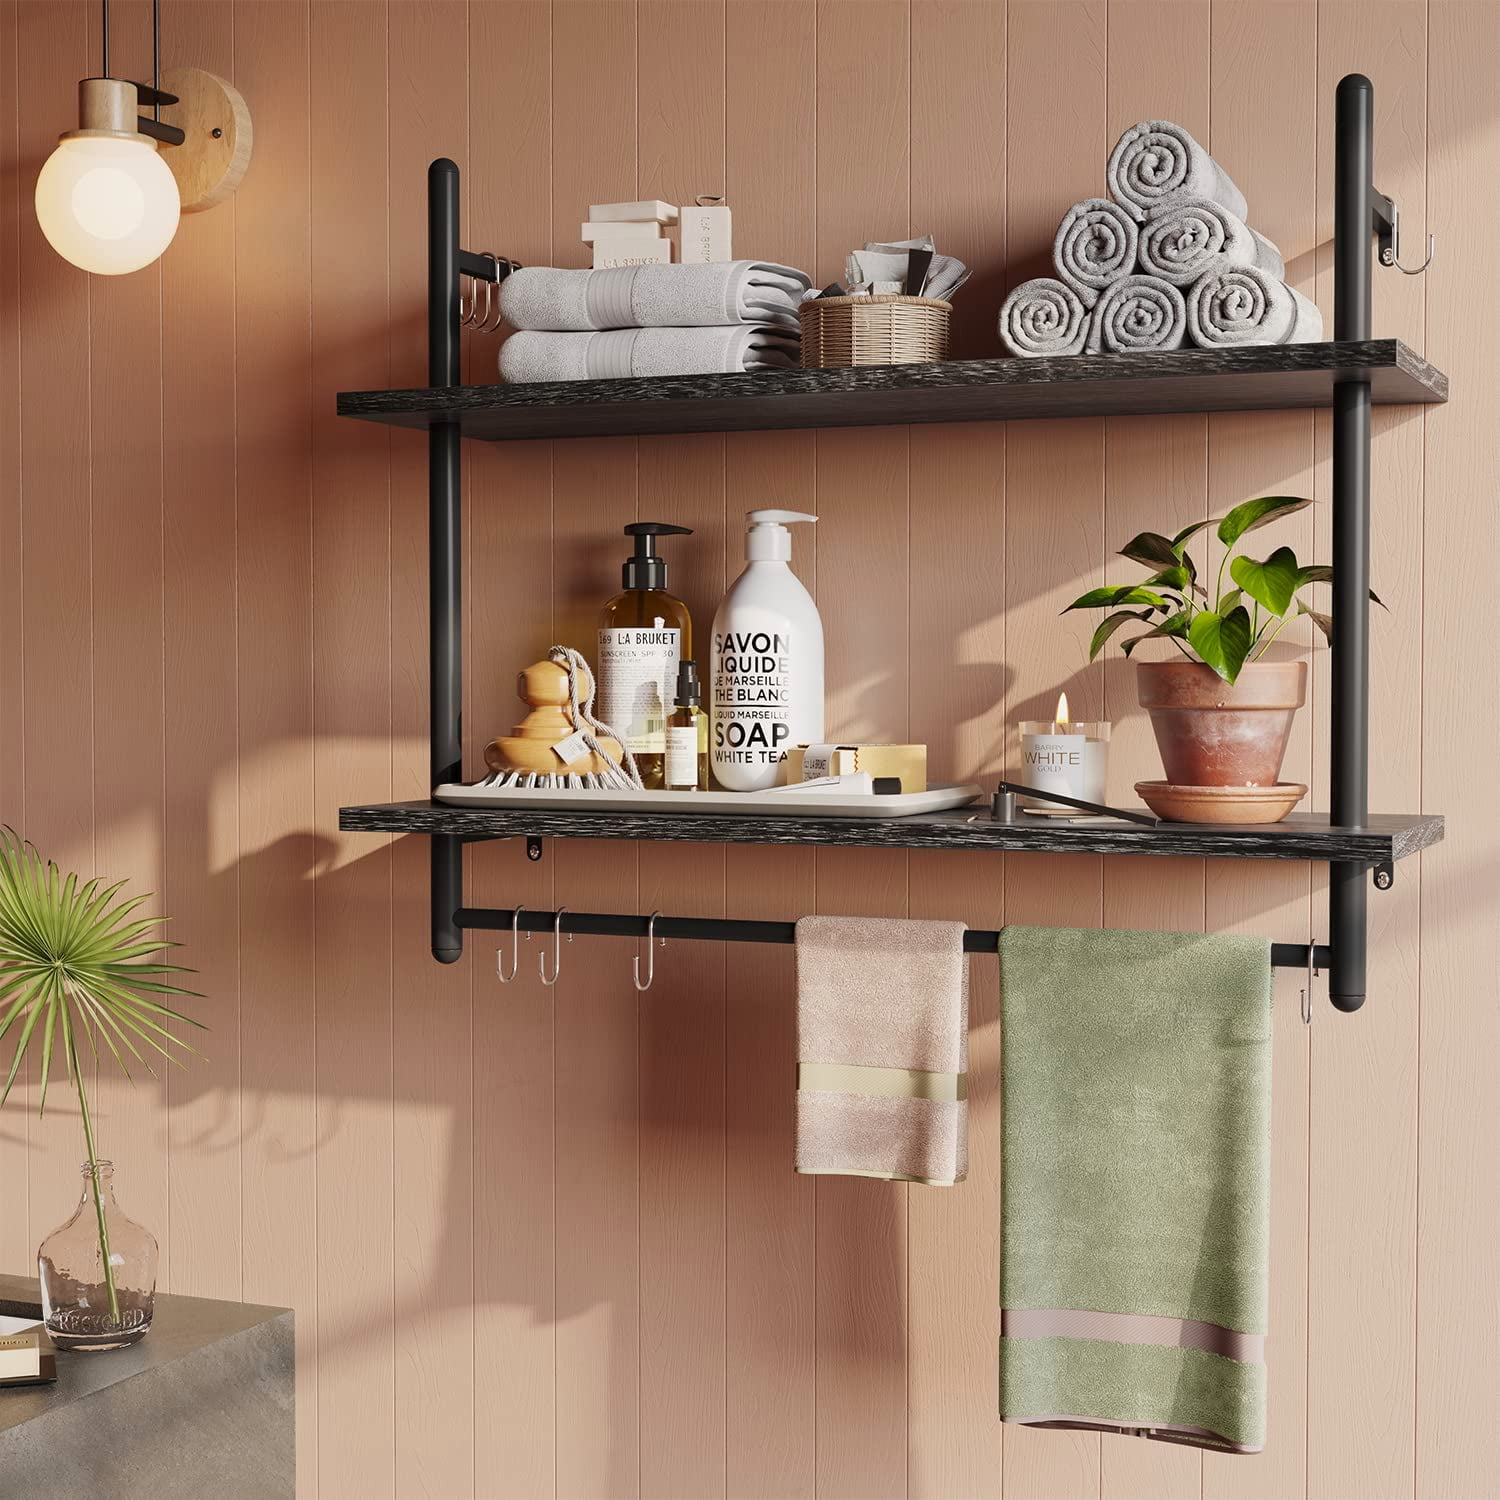 34 Lovely Floating Shelves Ideas For Kitchens - Shelterness